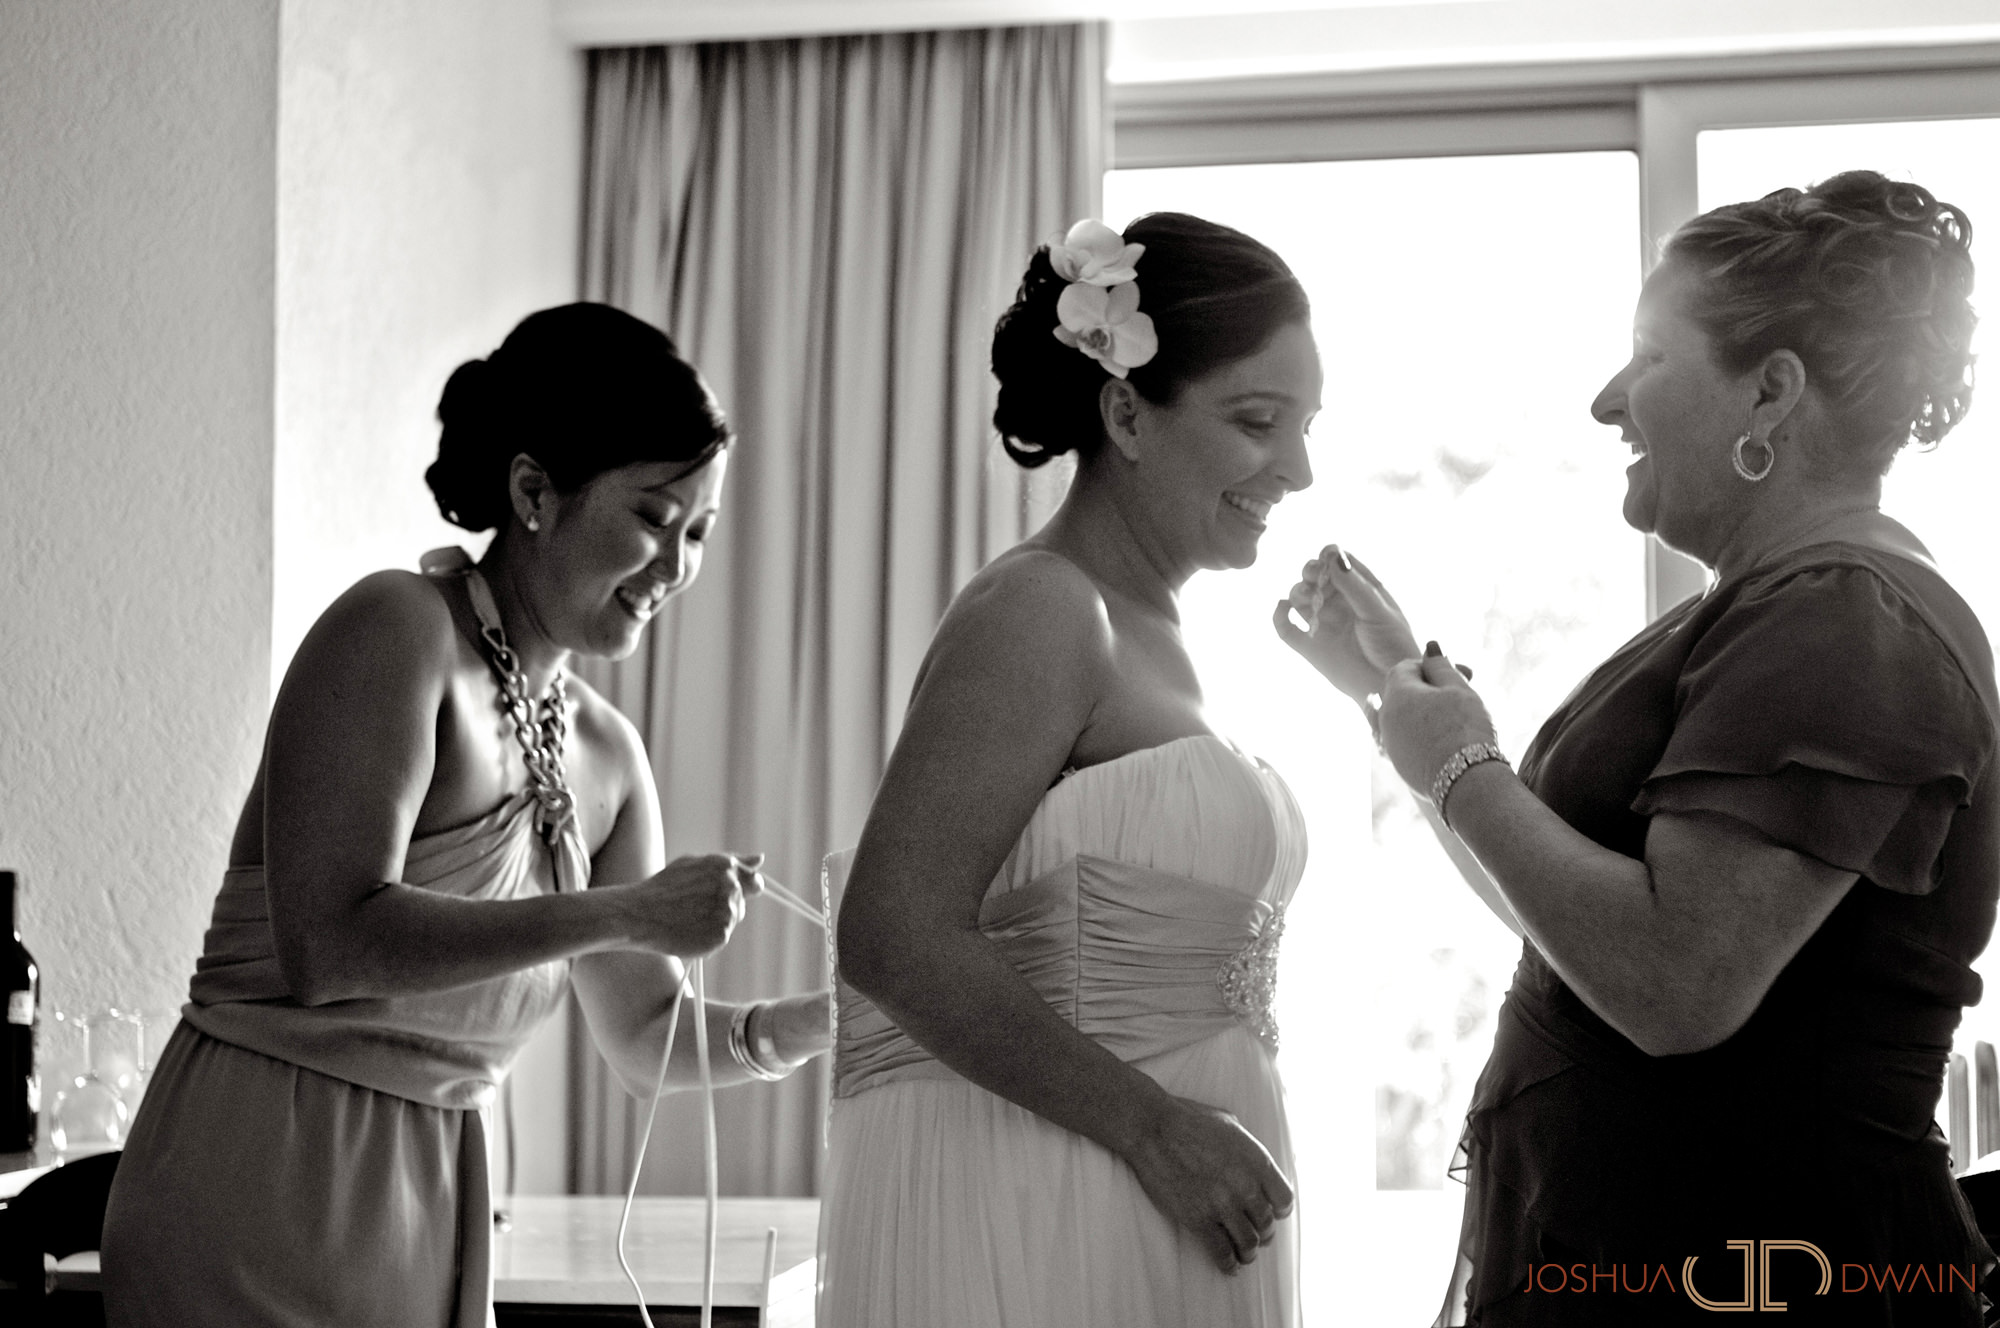 monica-damien--012-hard-rock-cafe-cancun-mexico-wedding-photographer-joshua-dwain-2011-06-11_md_258